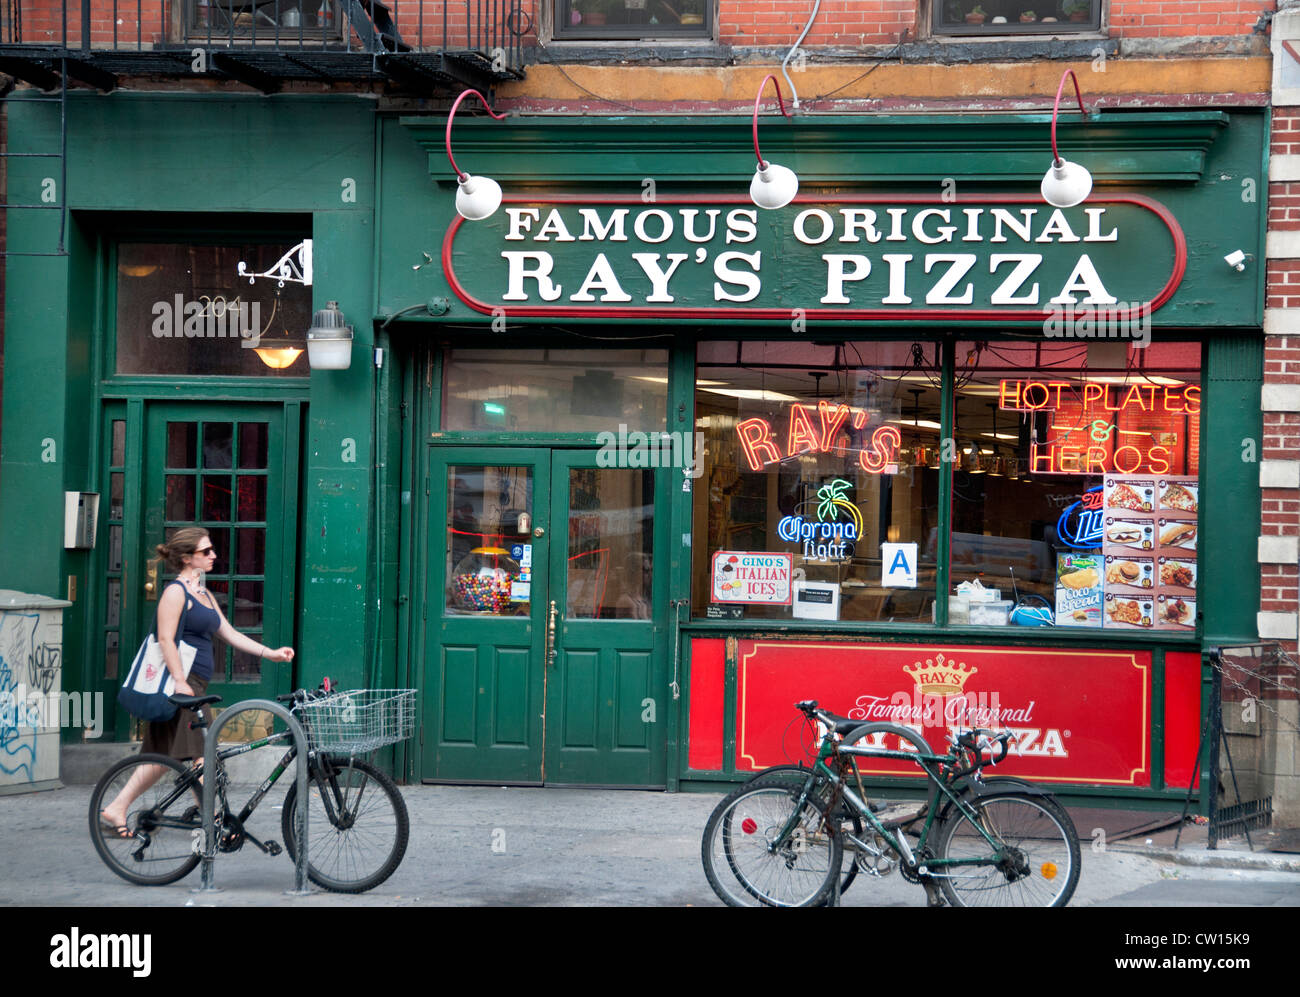 Célèbre Ray's Pizza original 8ème Avenue Chelsea Meatpacking District Manhattan New York United States of America Banque D'Images